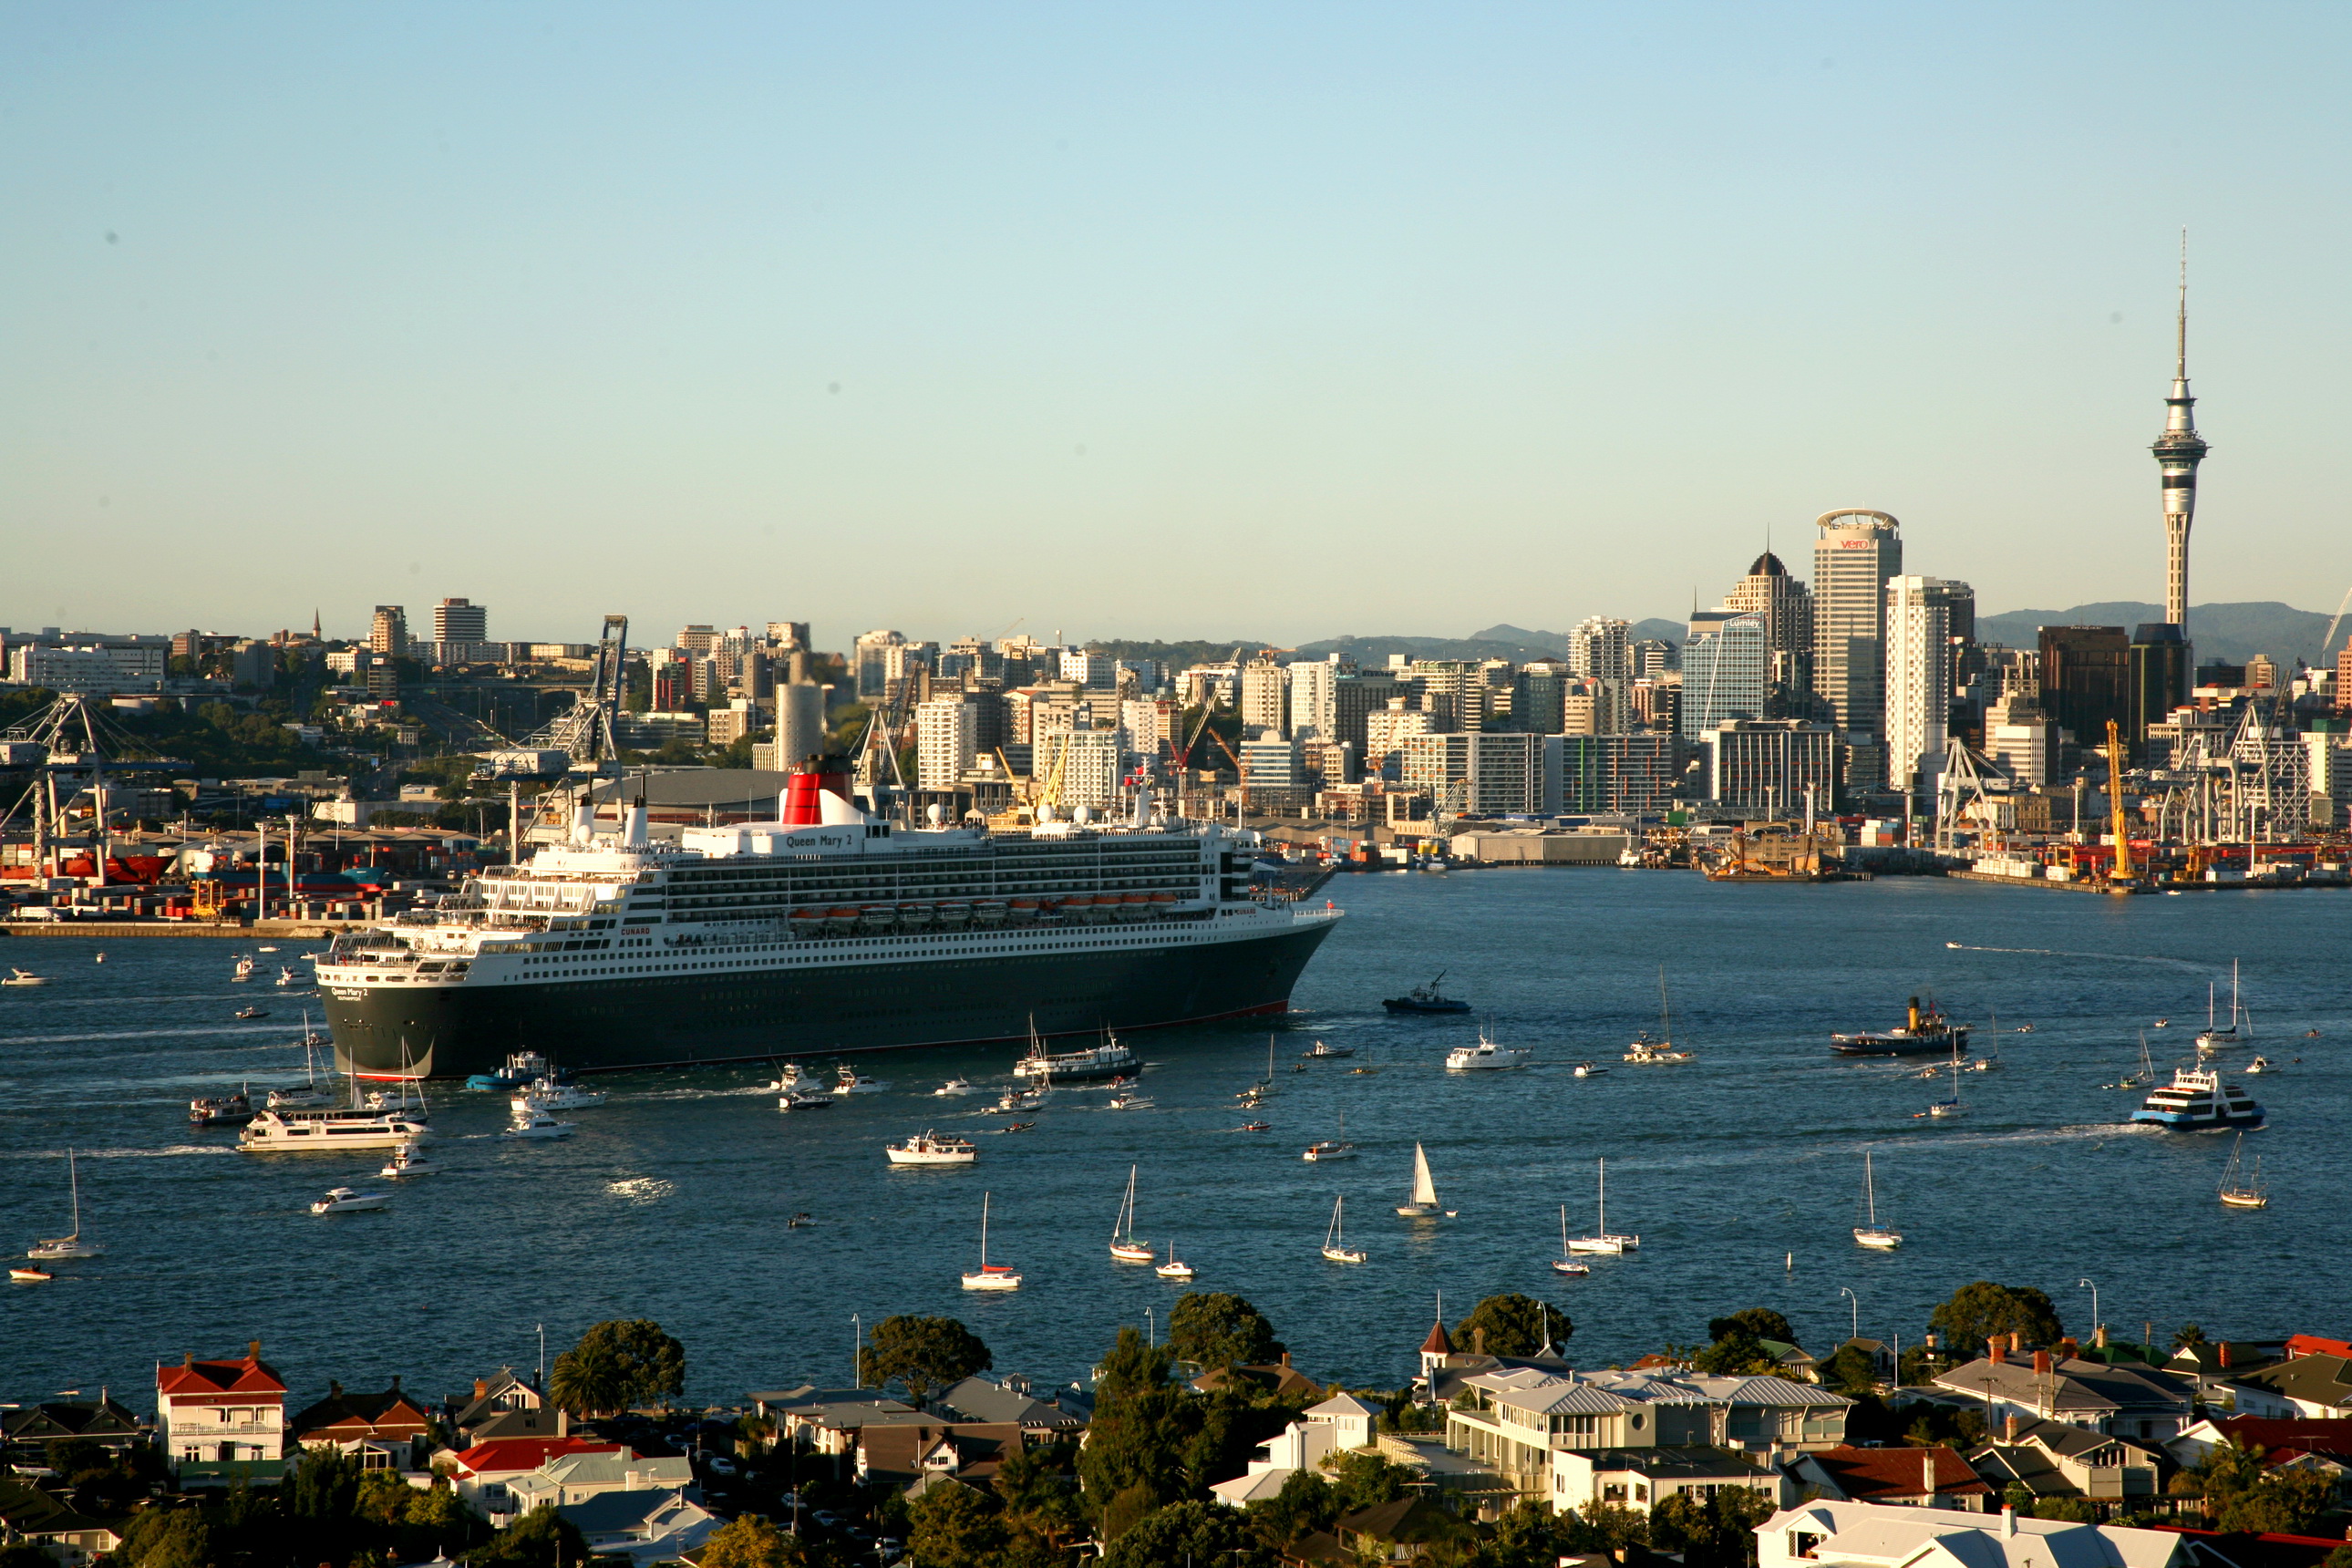 RMS Queen Mary 2 is a British transatlantic ocean liner